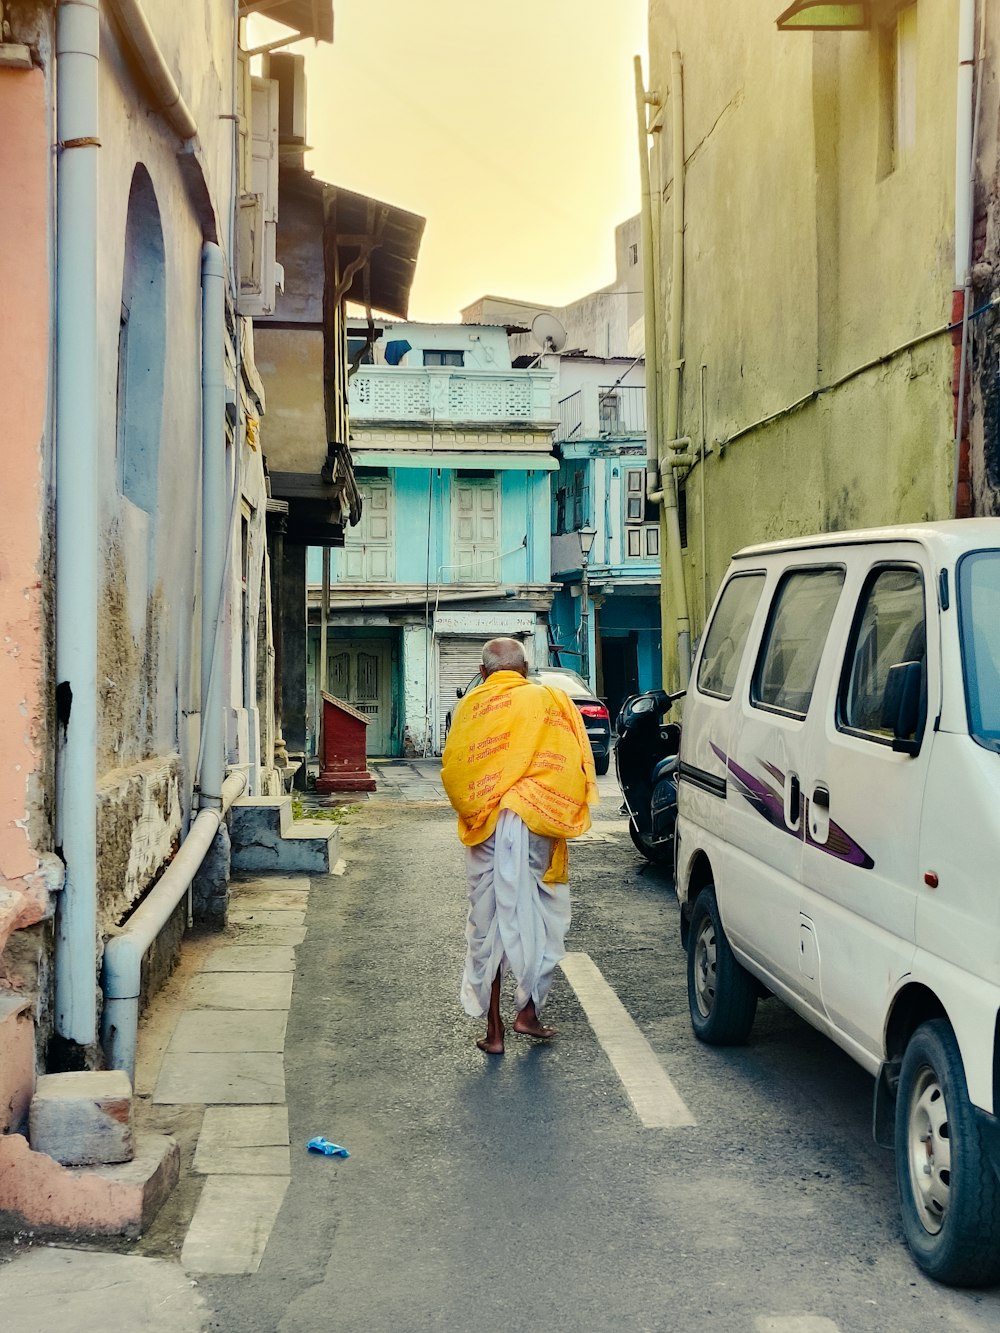 a man walking down a street holding a yellow umbrella